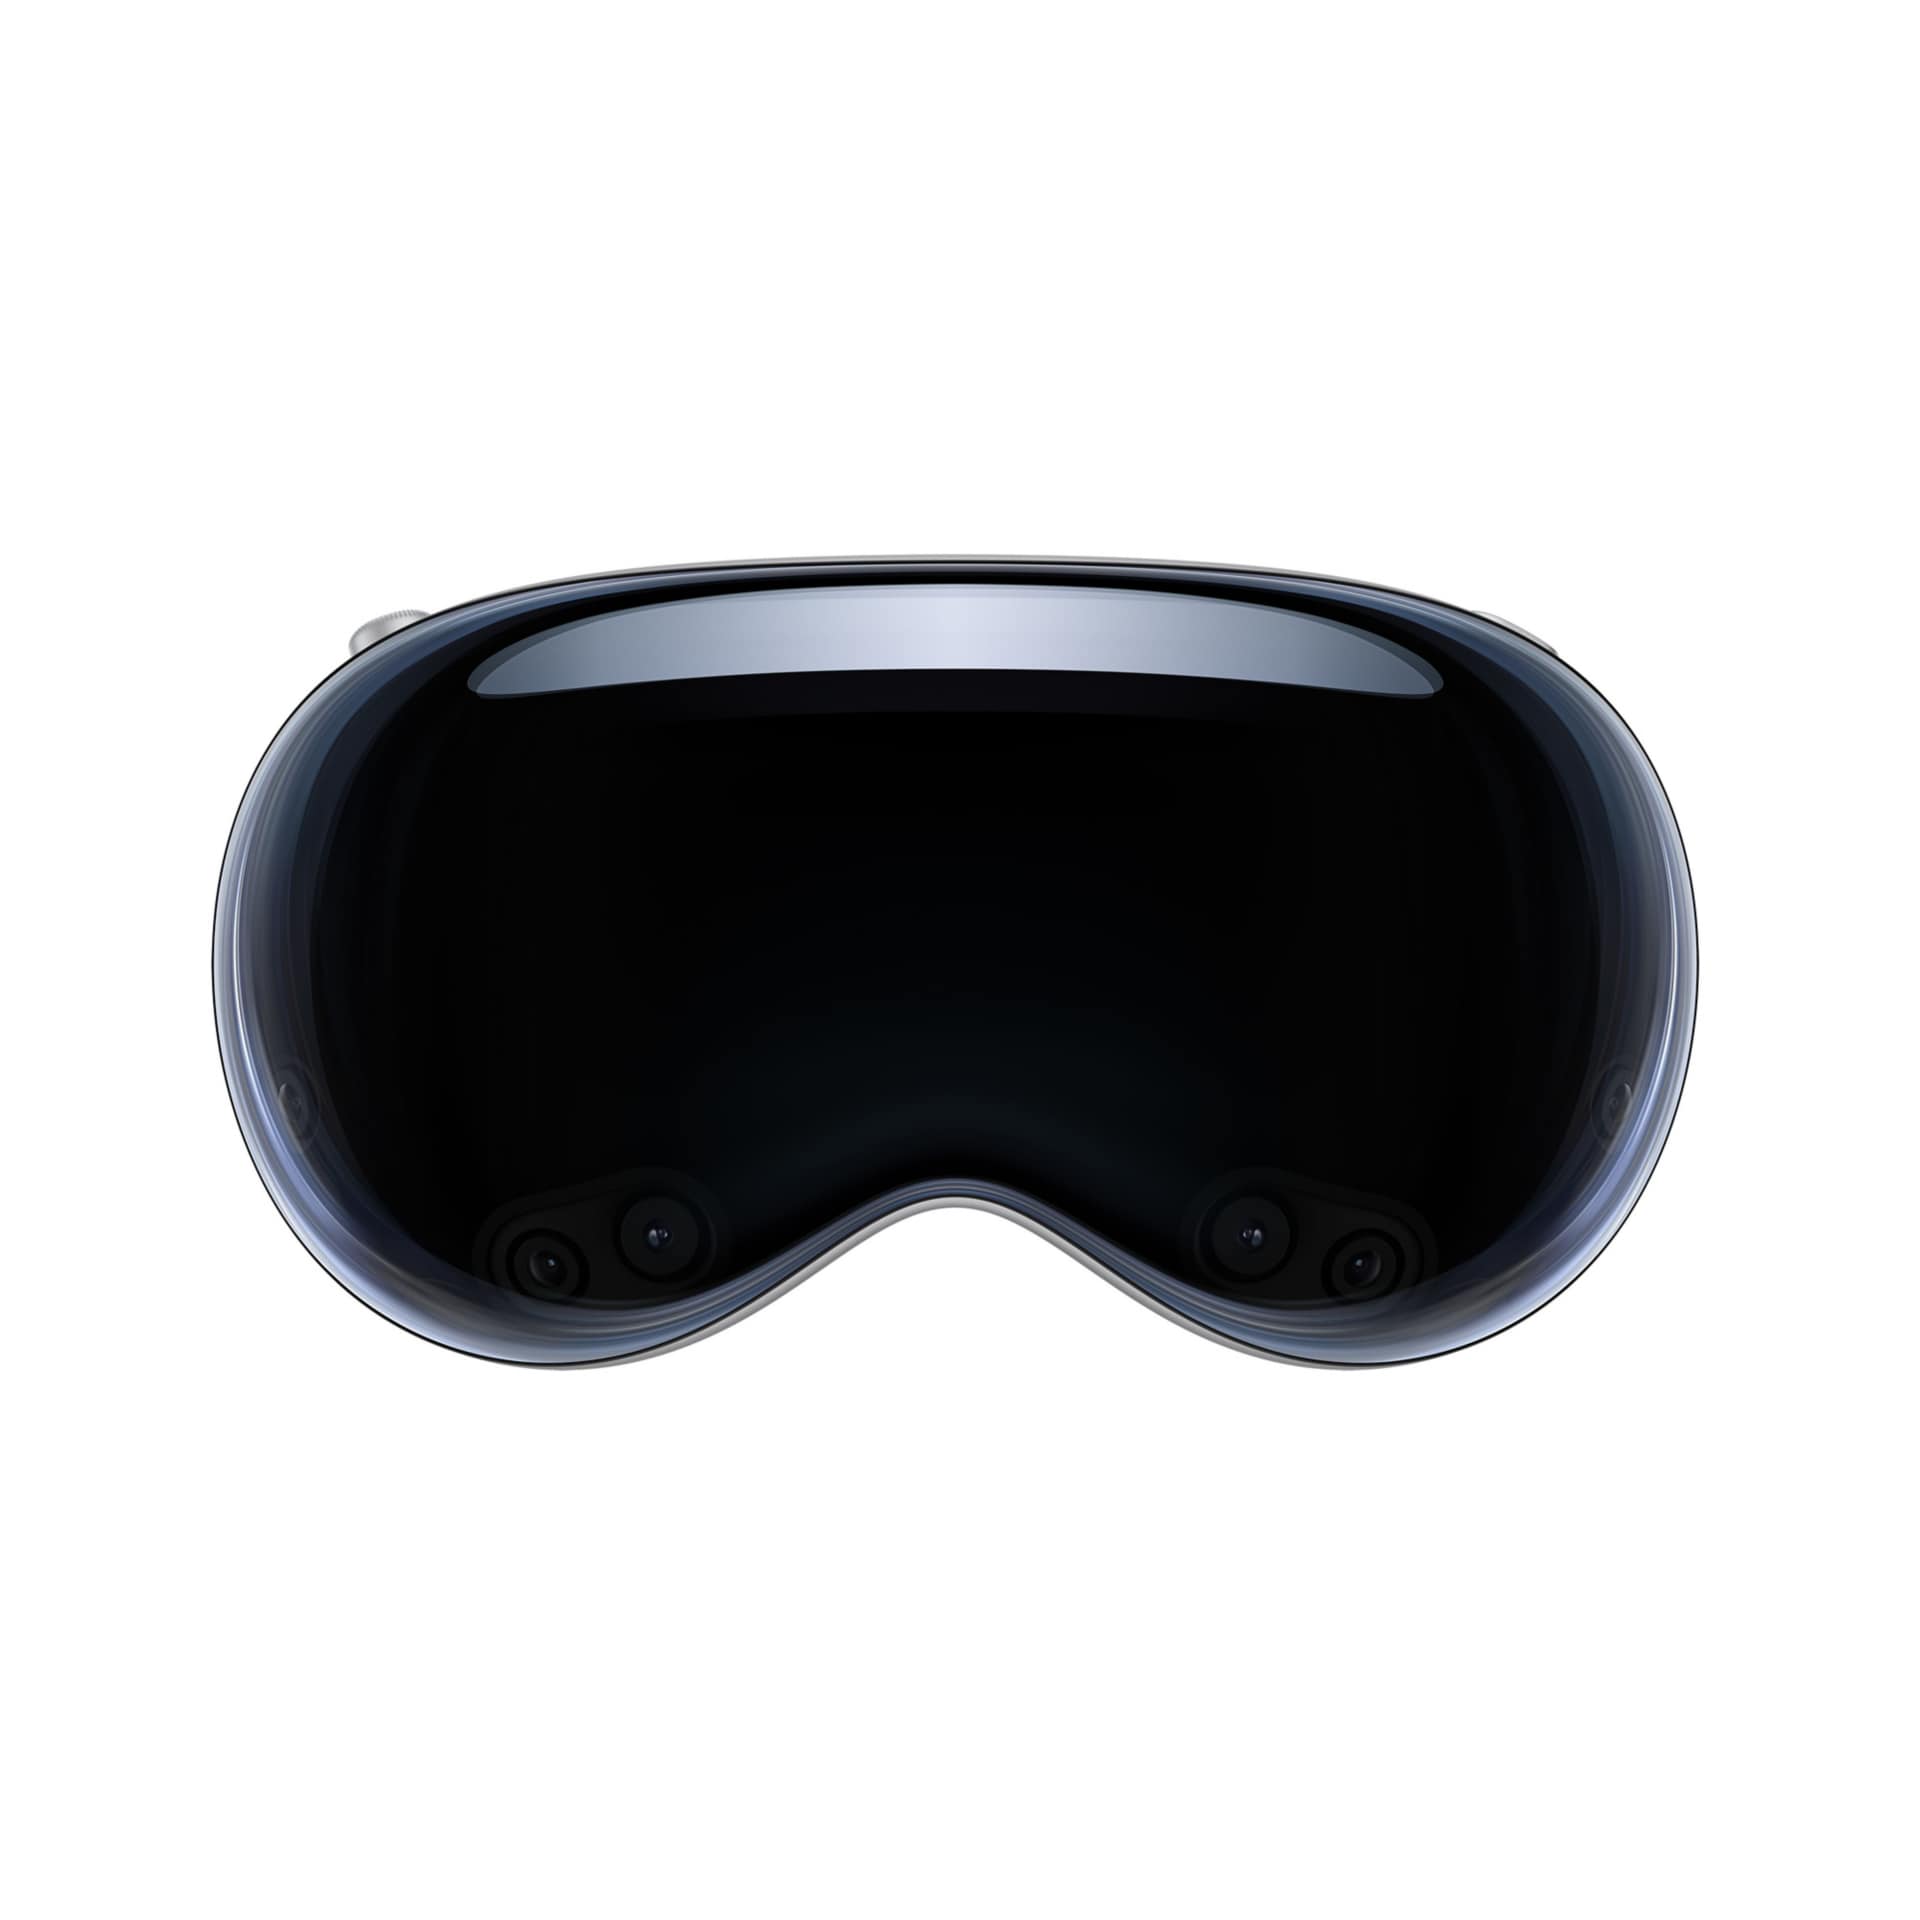 Apple Vision Pro - 1 TB Storage - Headband: M - Light Seal: 34N - VR Headset